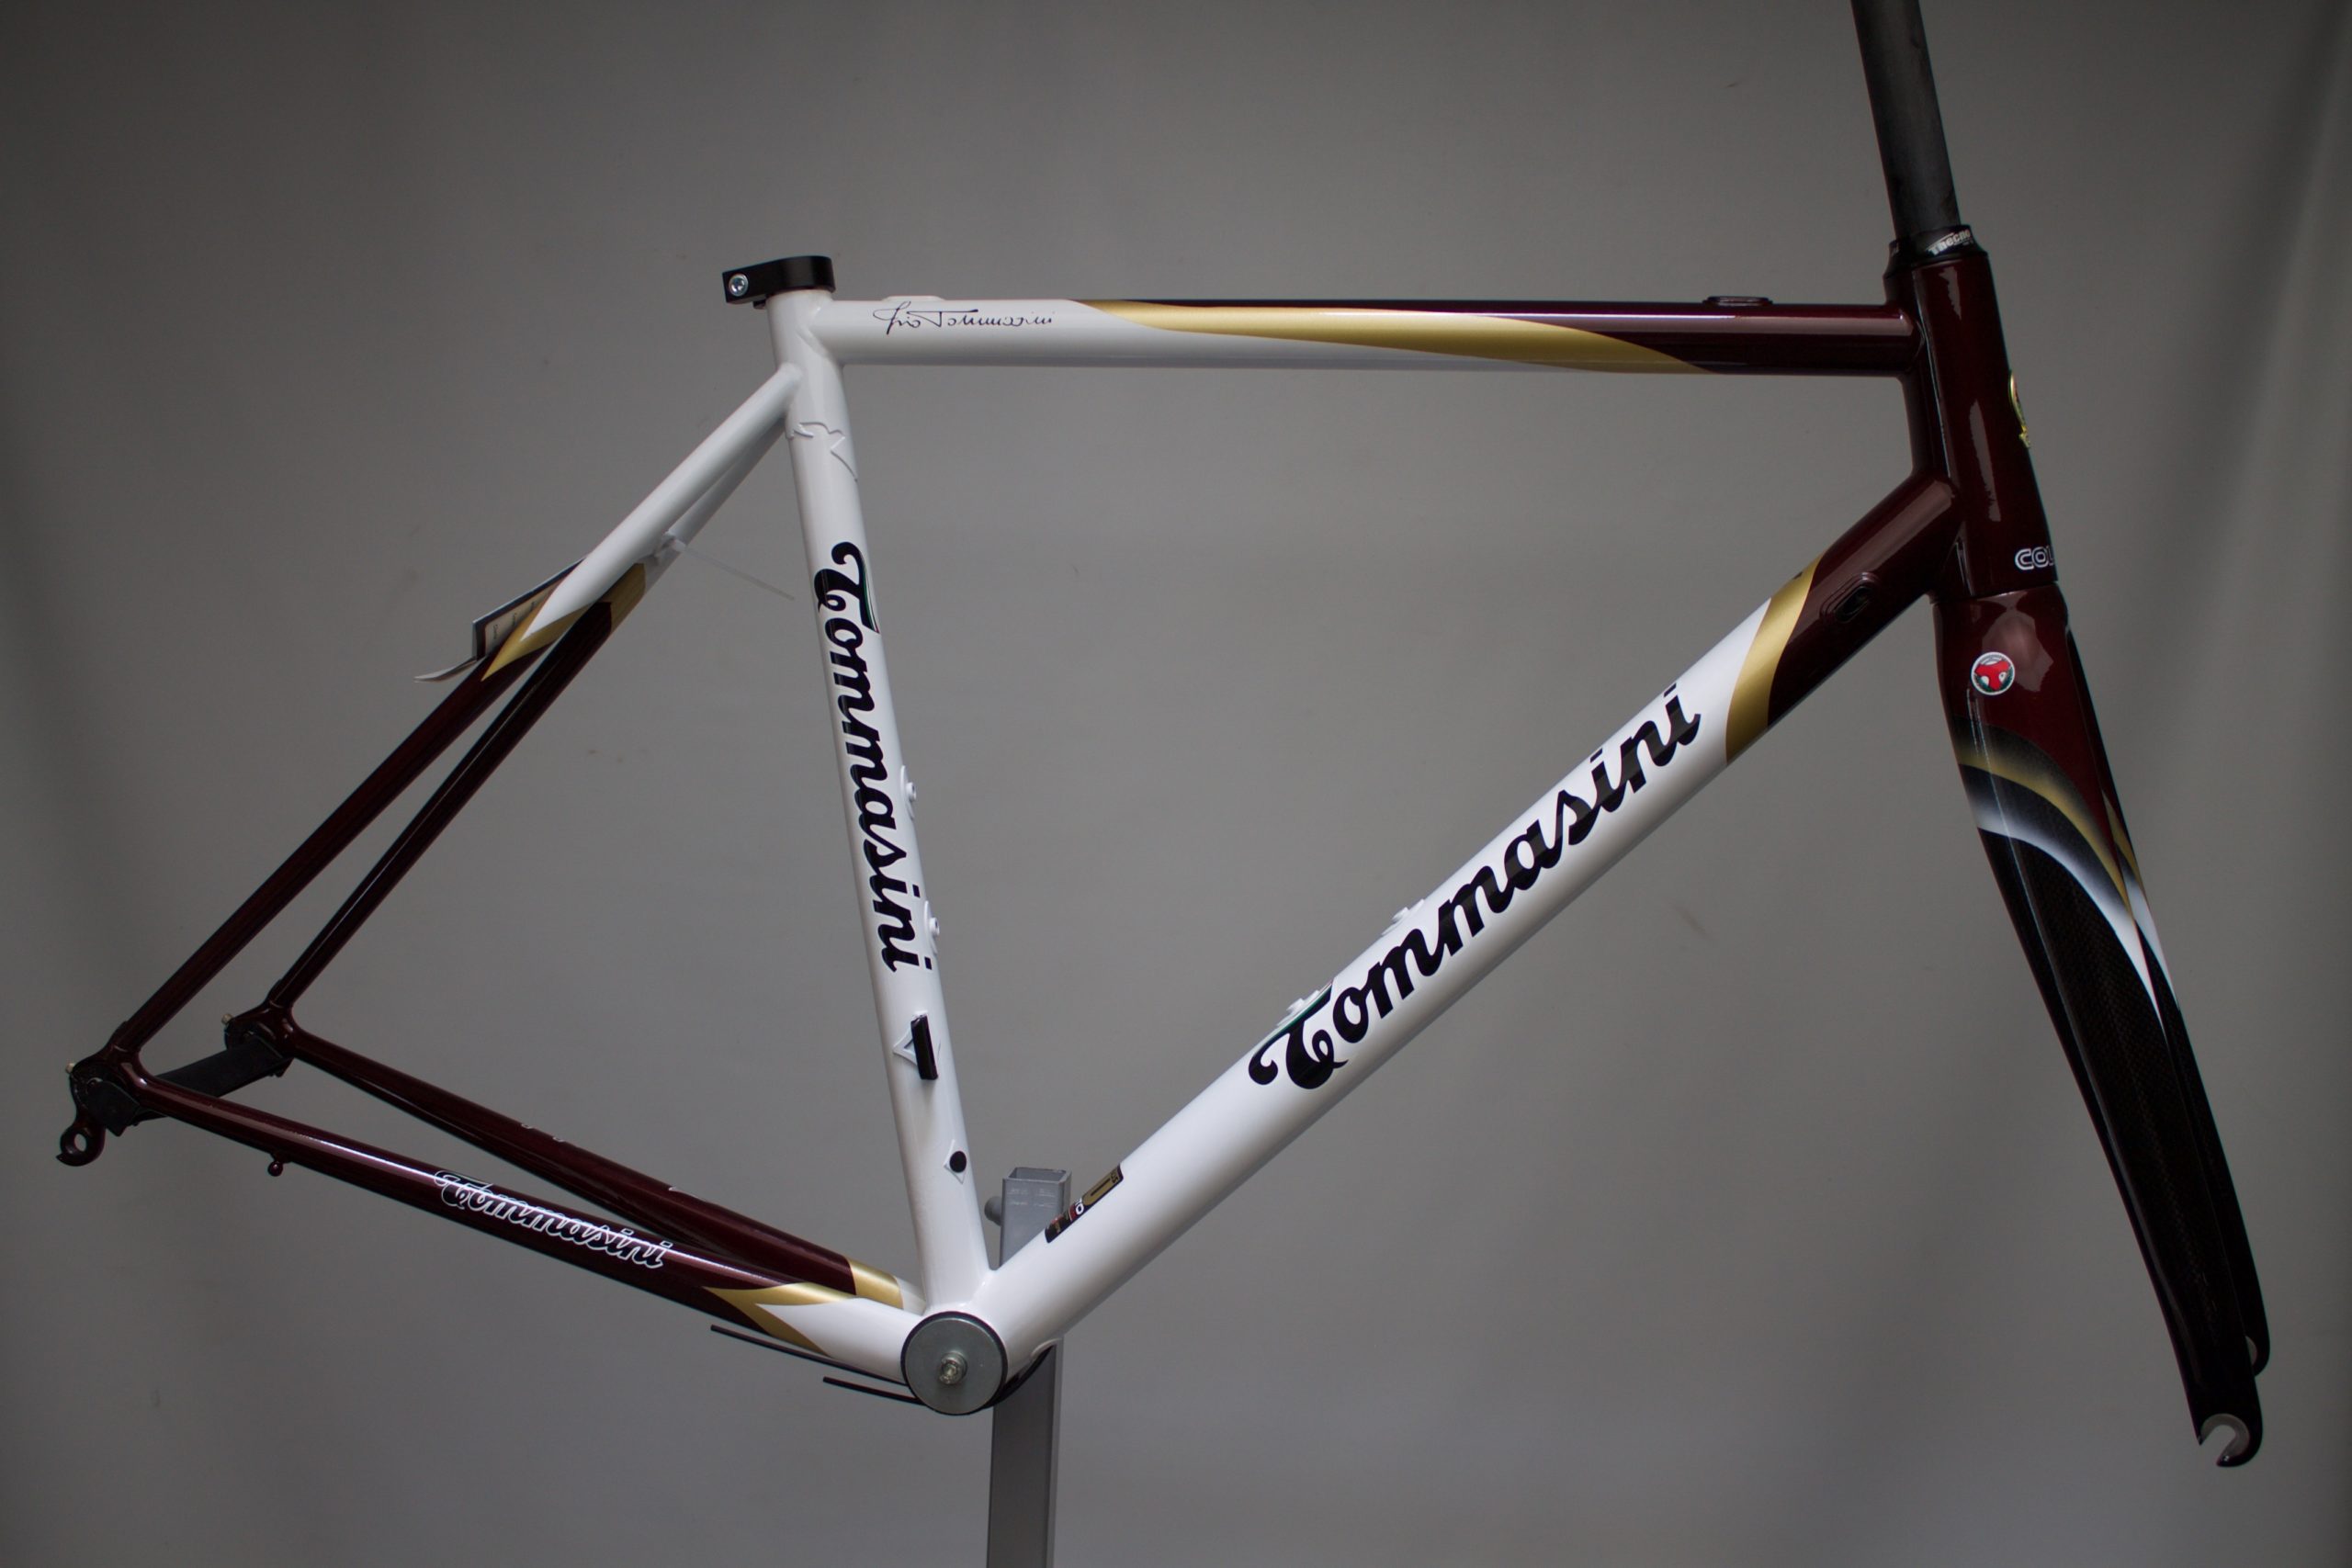 columbus bike frame